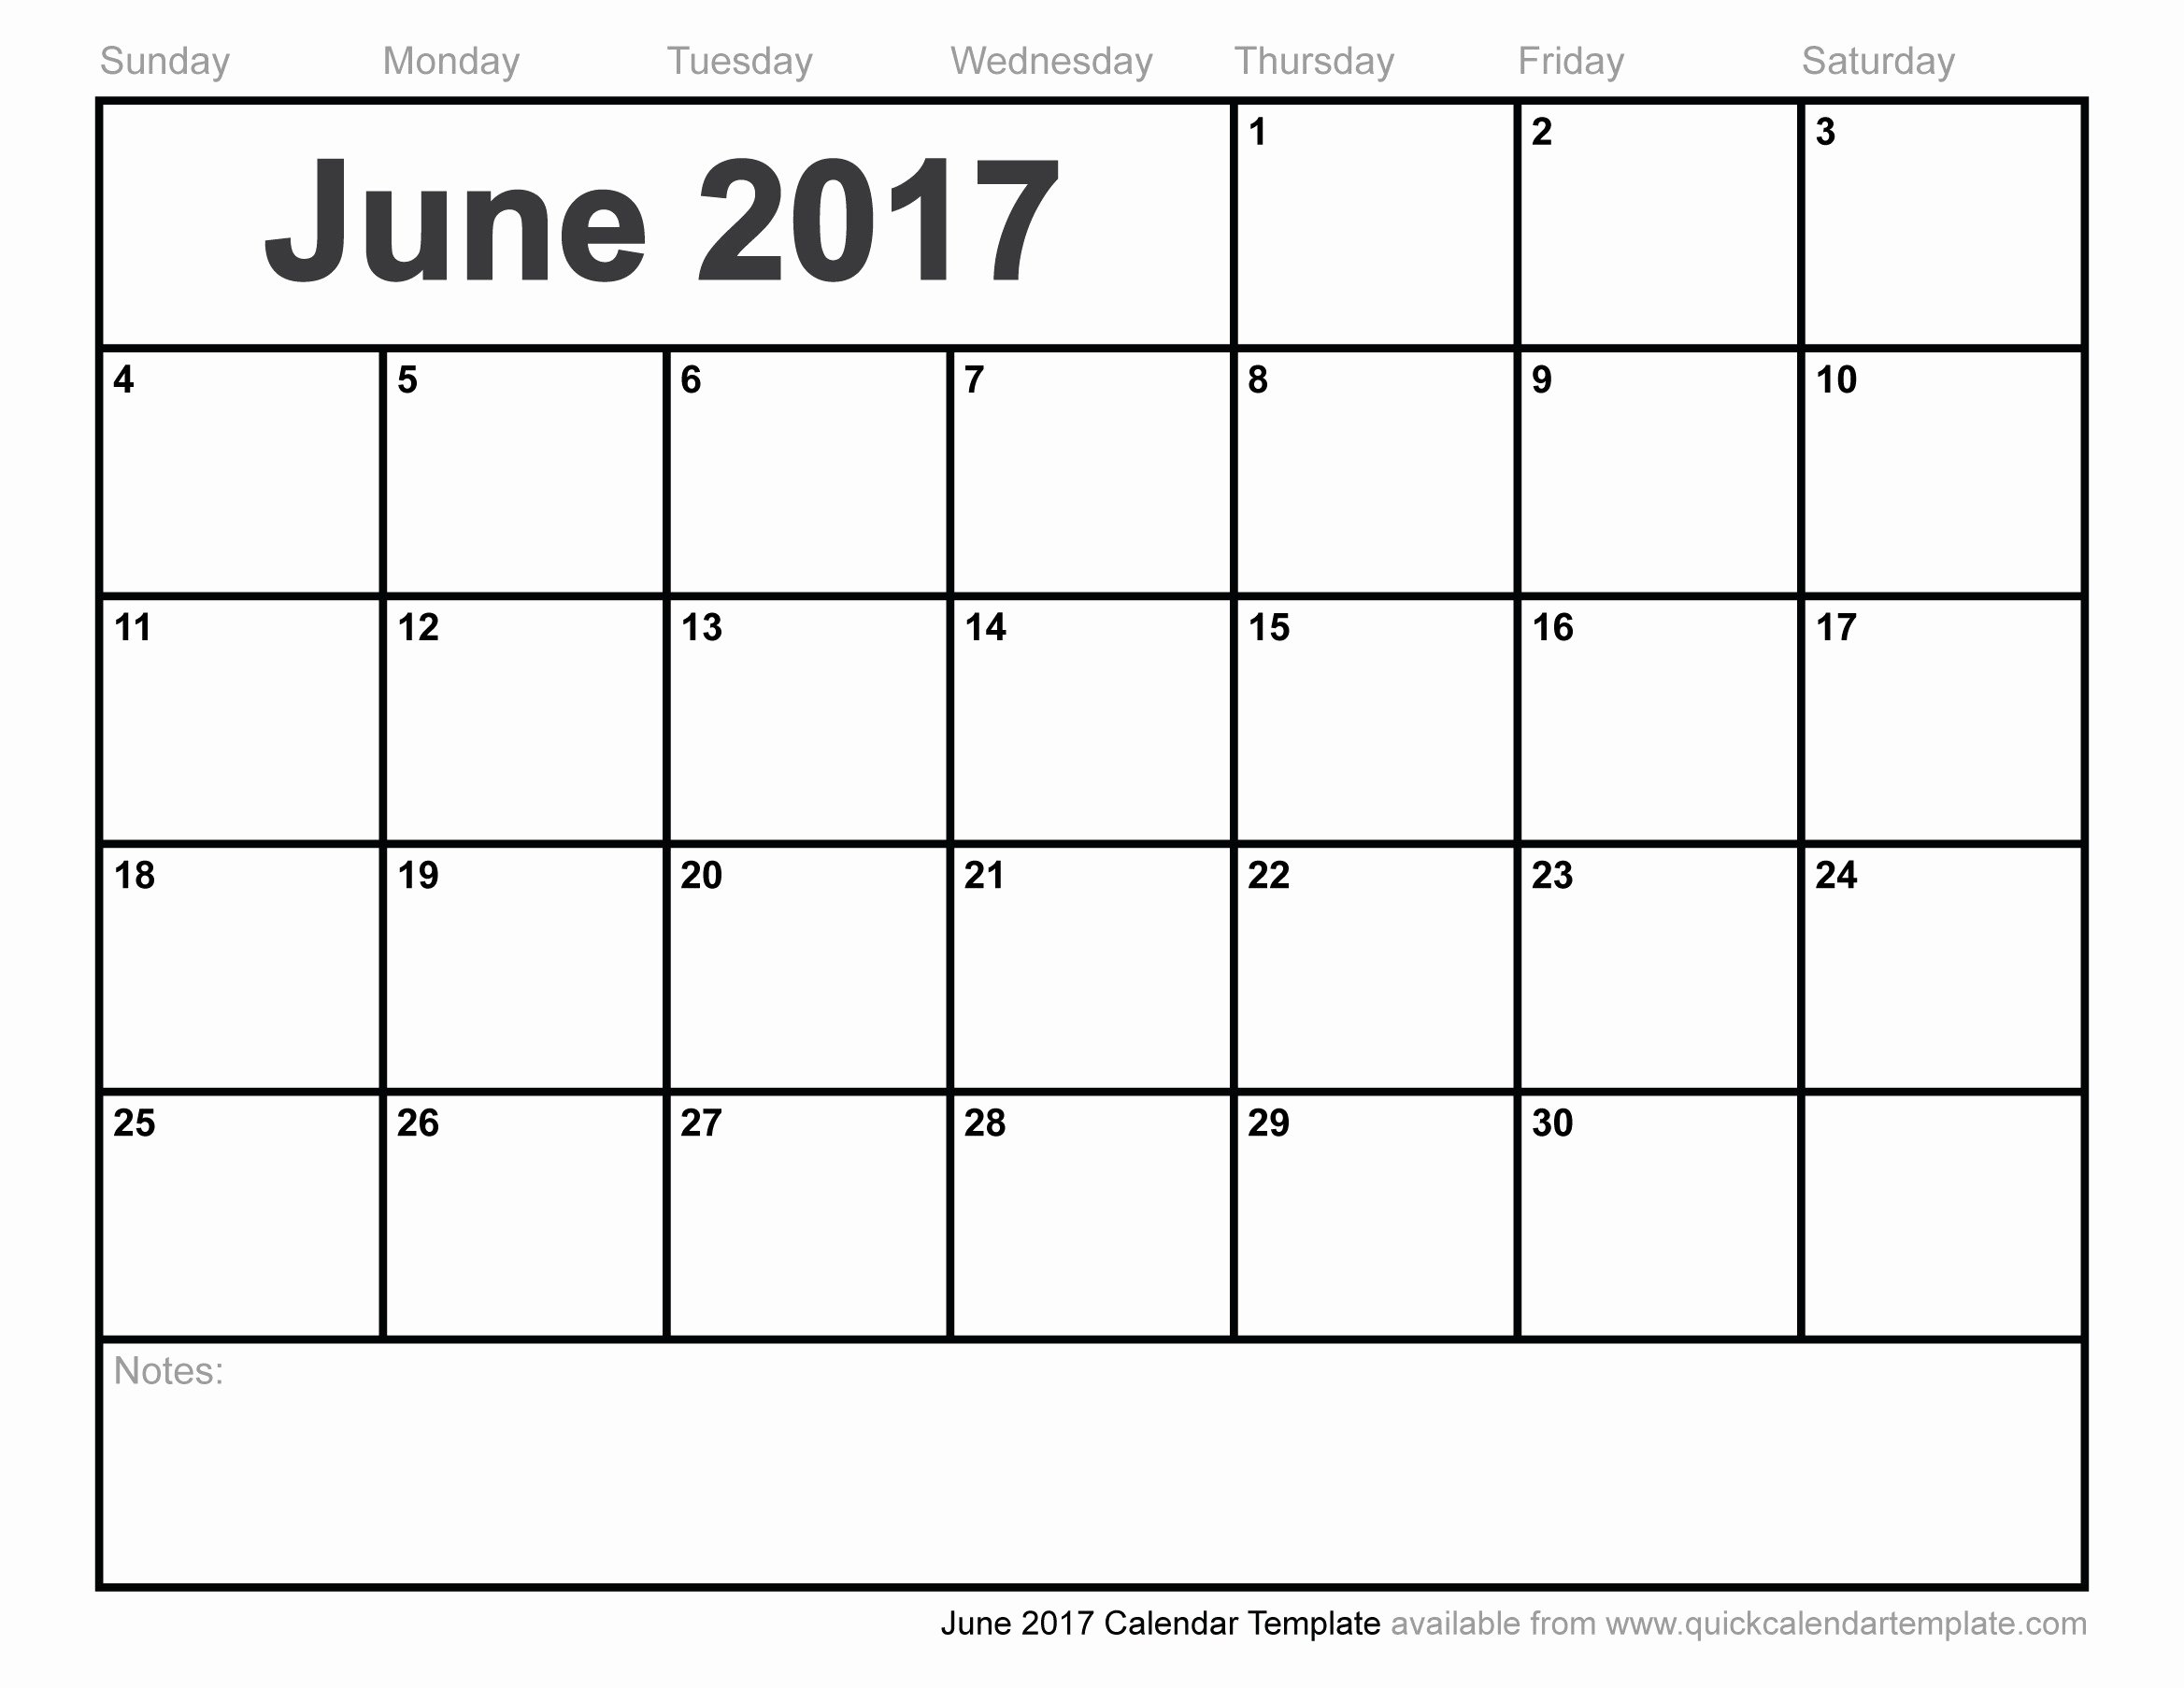 June 2017 Calendar Word